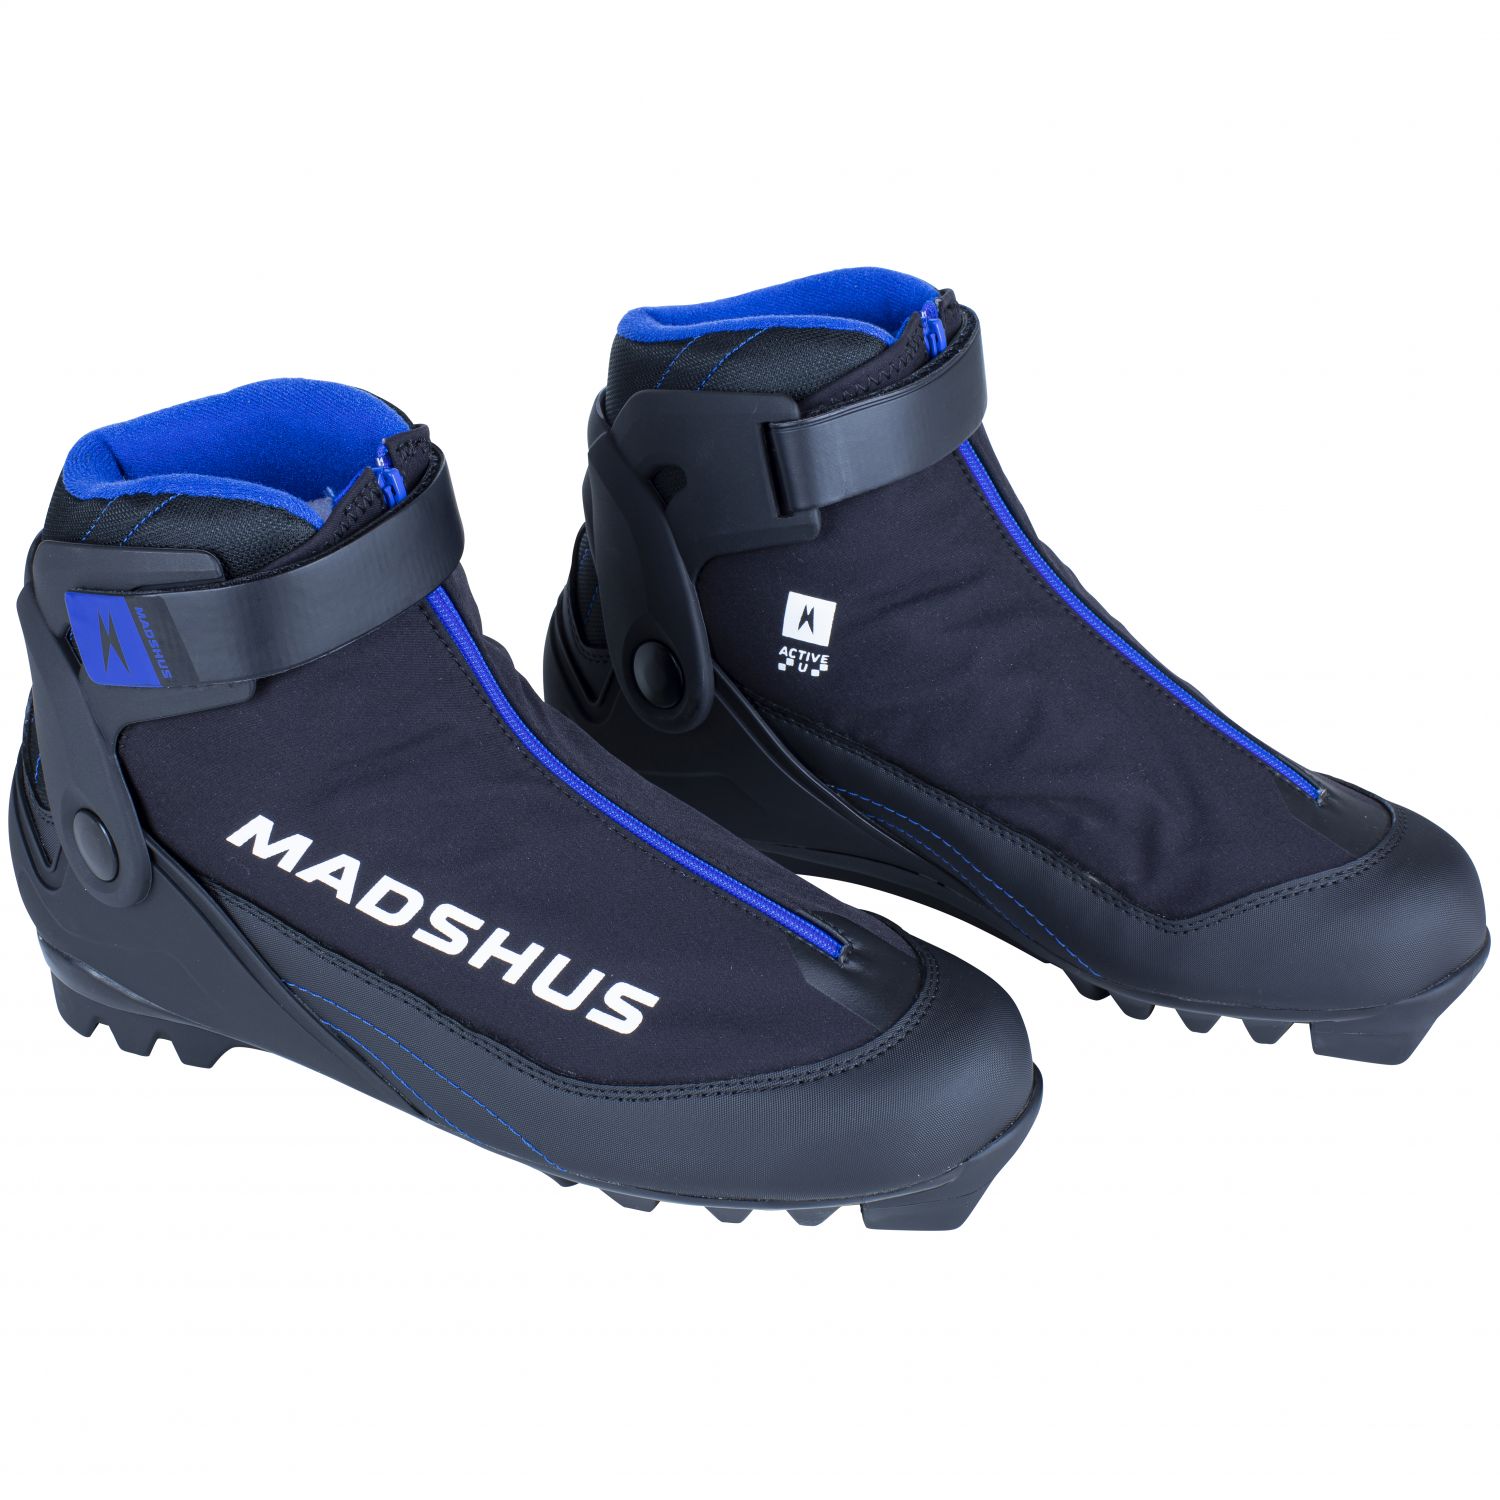 Madhus Active U, nordic boots, black